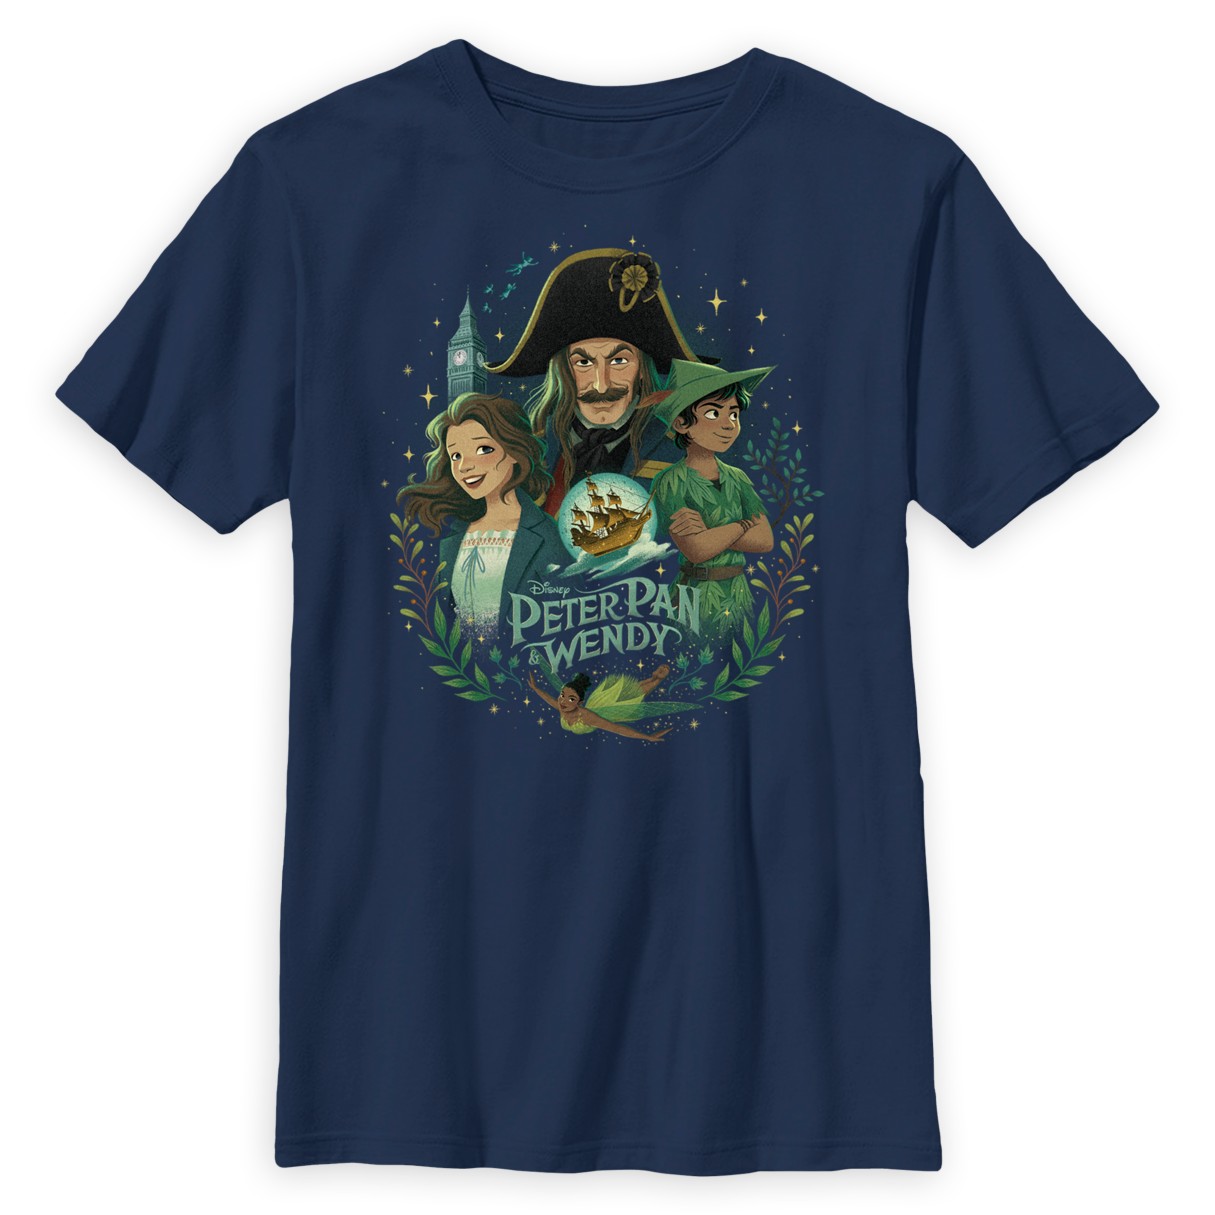 Peter Pan & Wendy Cast T-Shirt for Kids – Live Action Film | shopDisney